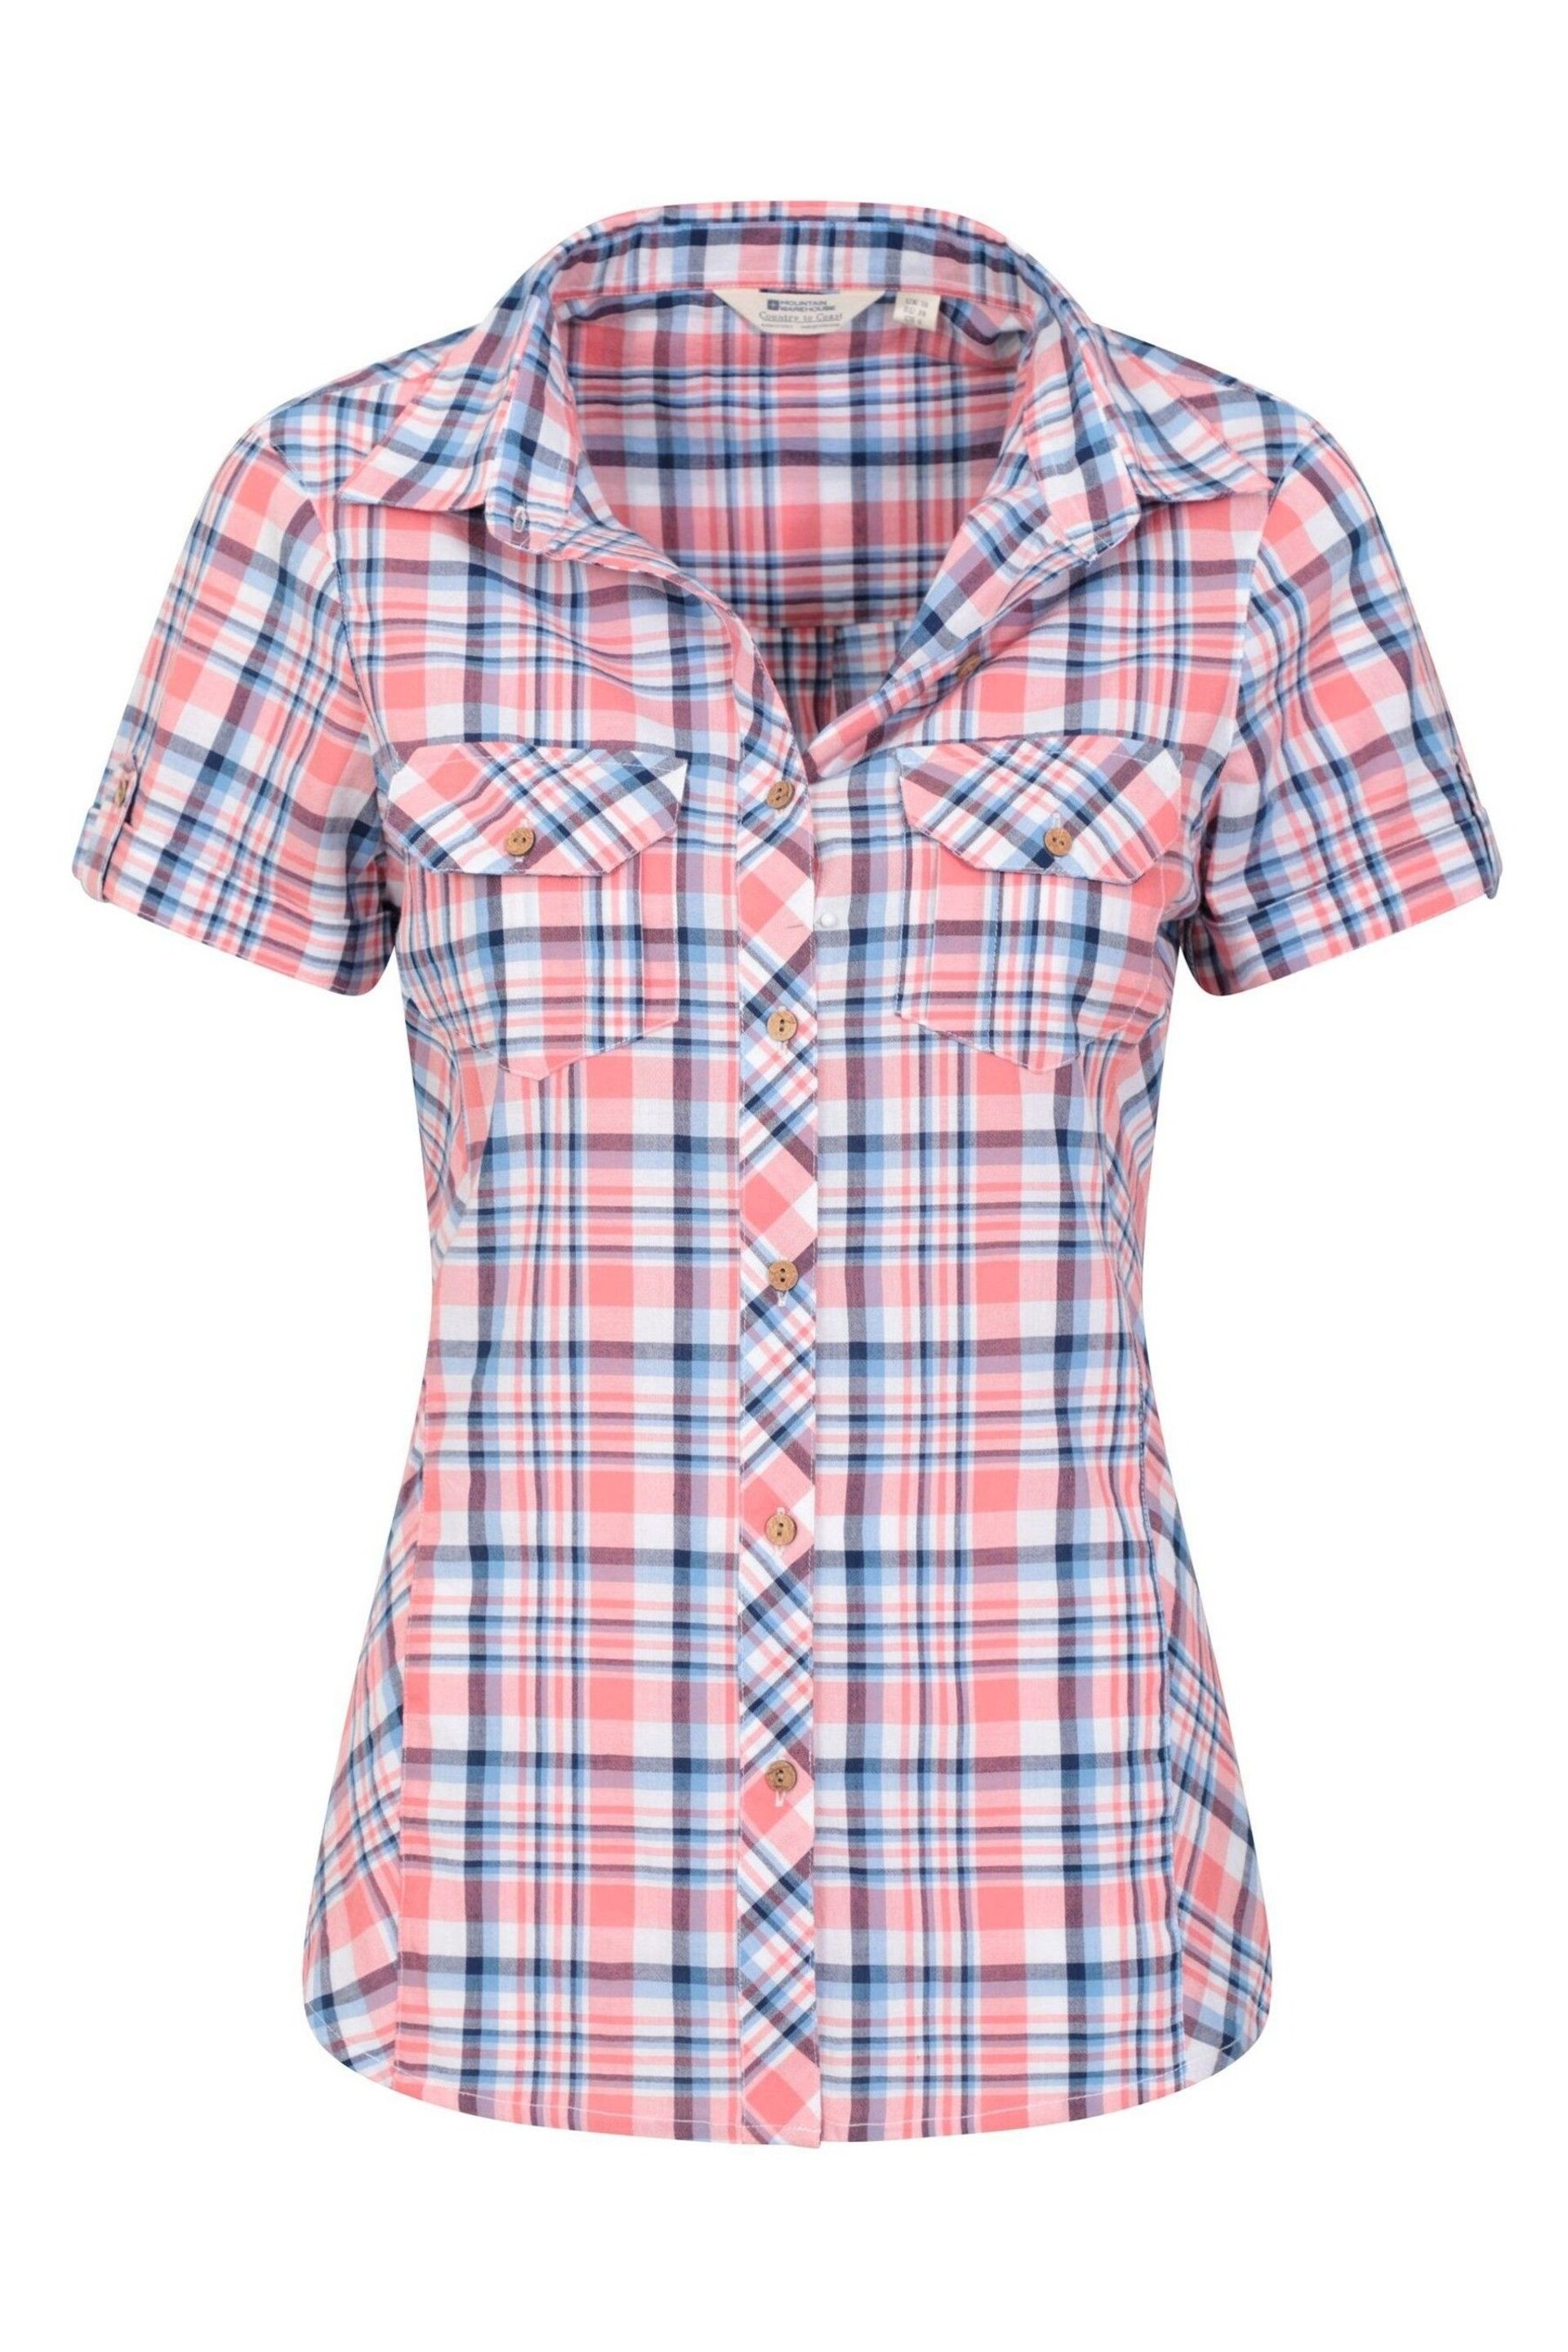 Mountain Warehouse Pink Holiday Cotton Shirt - Womens - Image 5 of 6